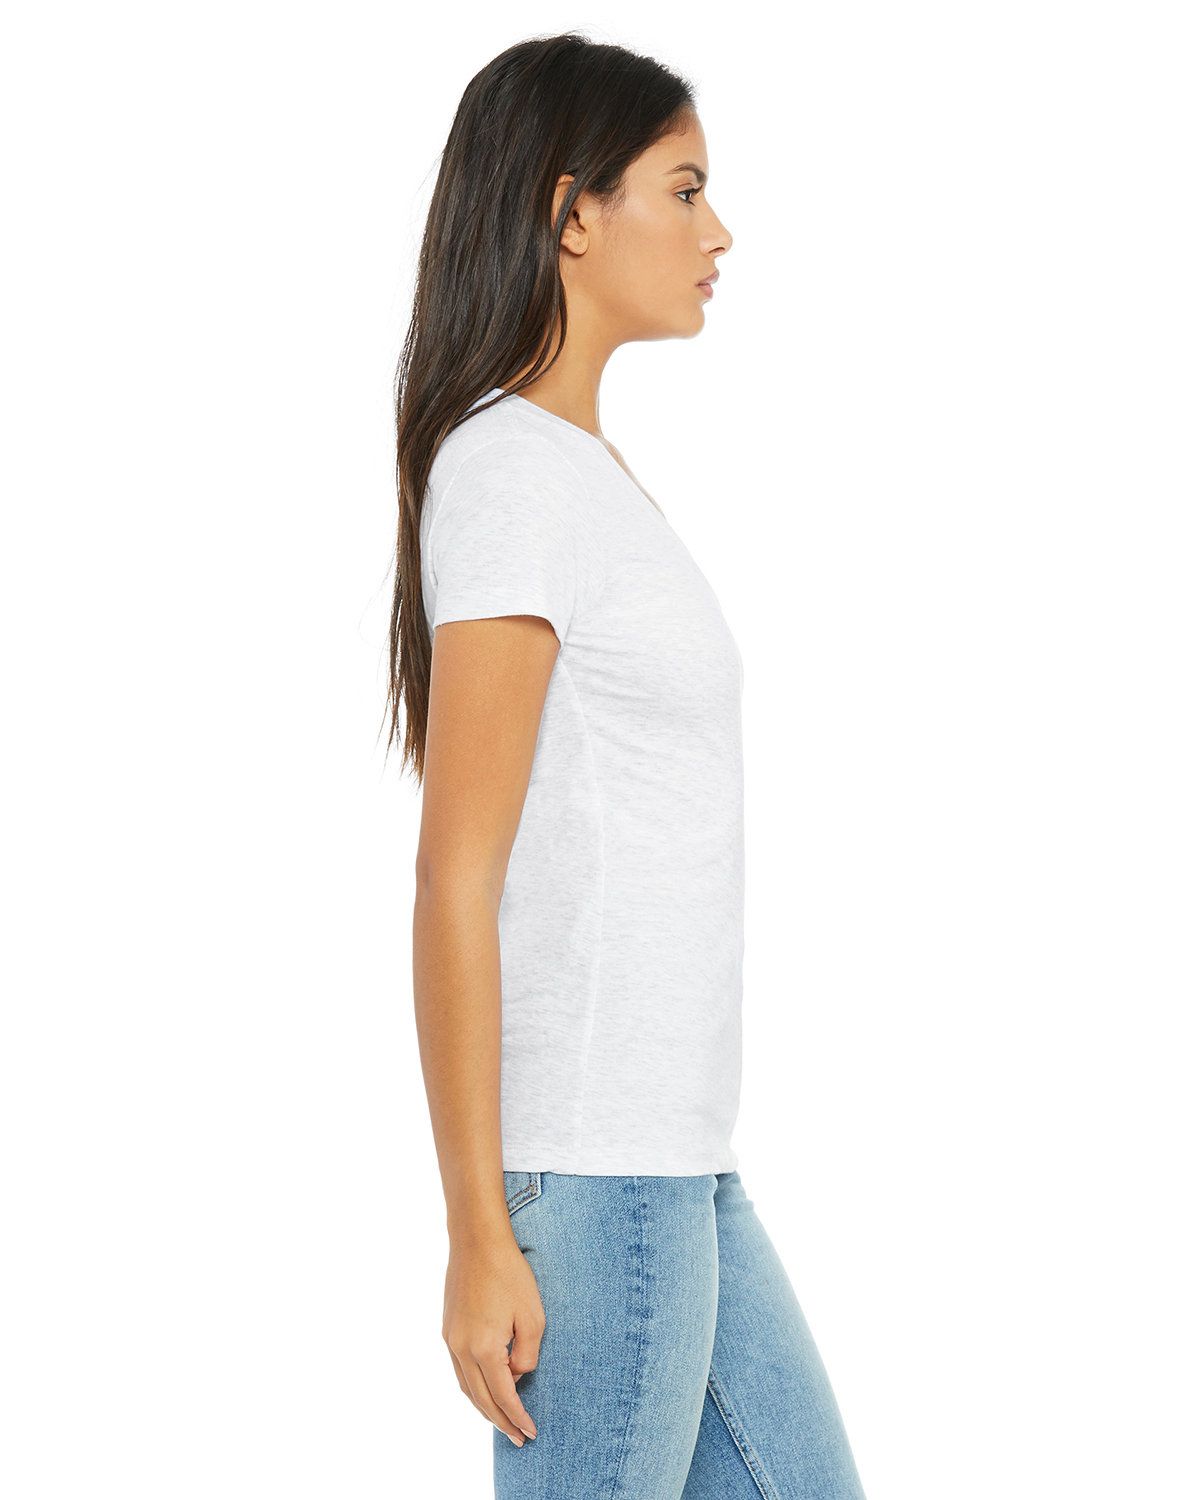 'Bella Canvas B6035 Ladies Jersey Short Sleeve Deep V Neck T-Shirt'